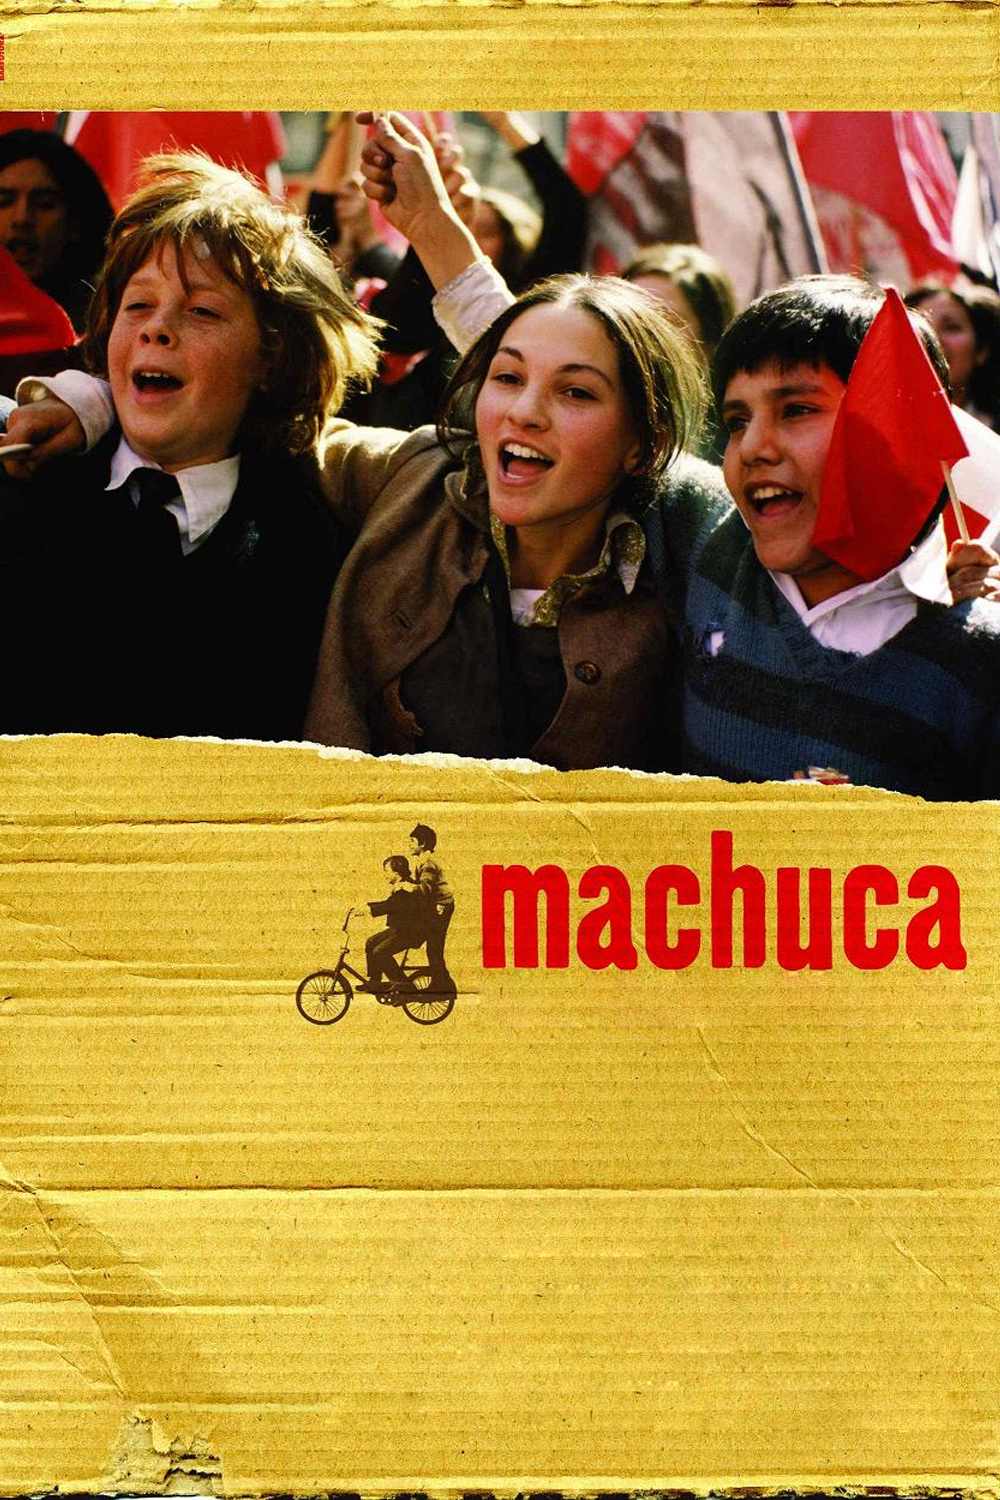 2004 Machuca movie poster